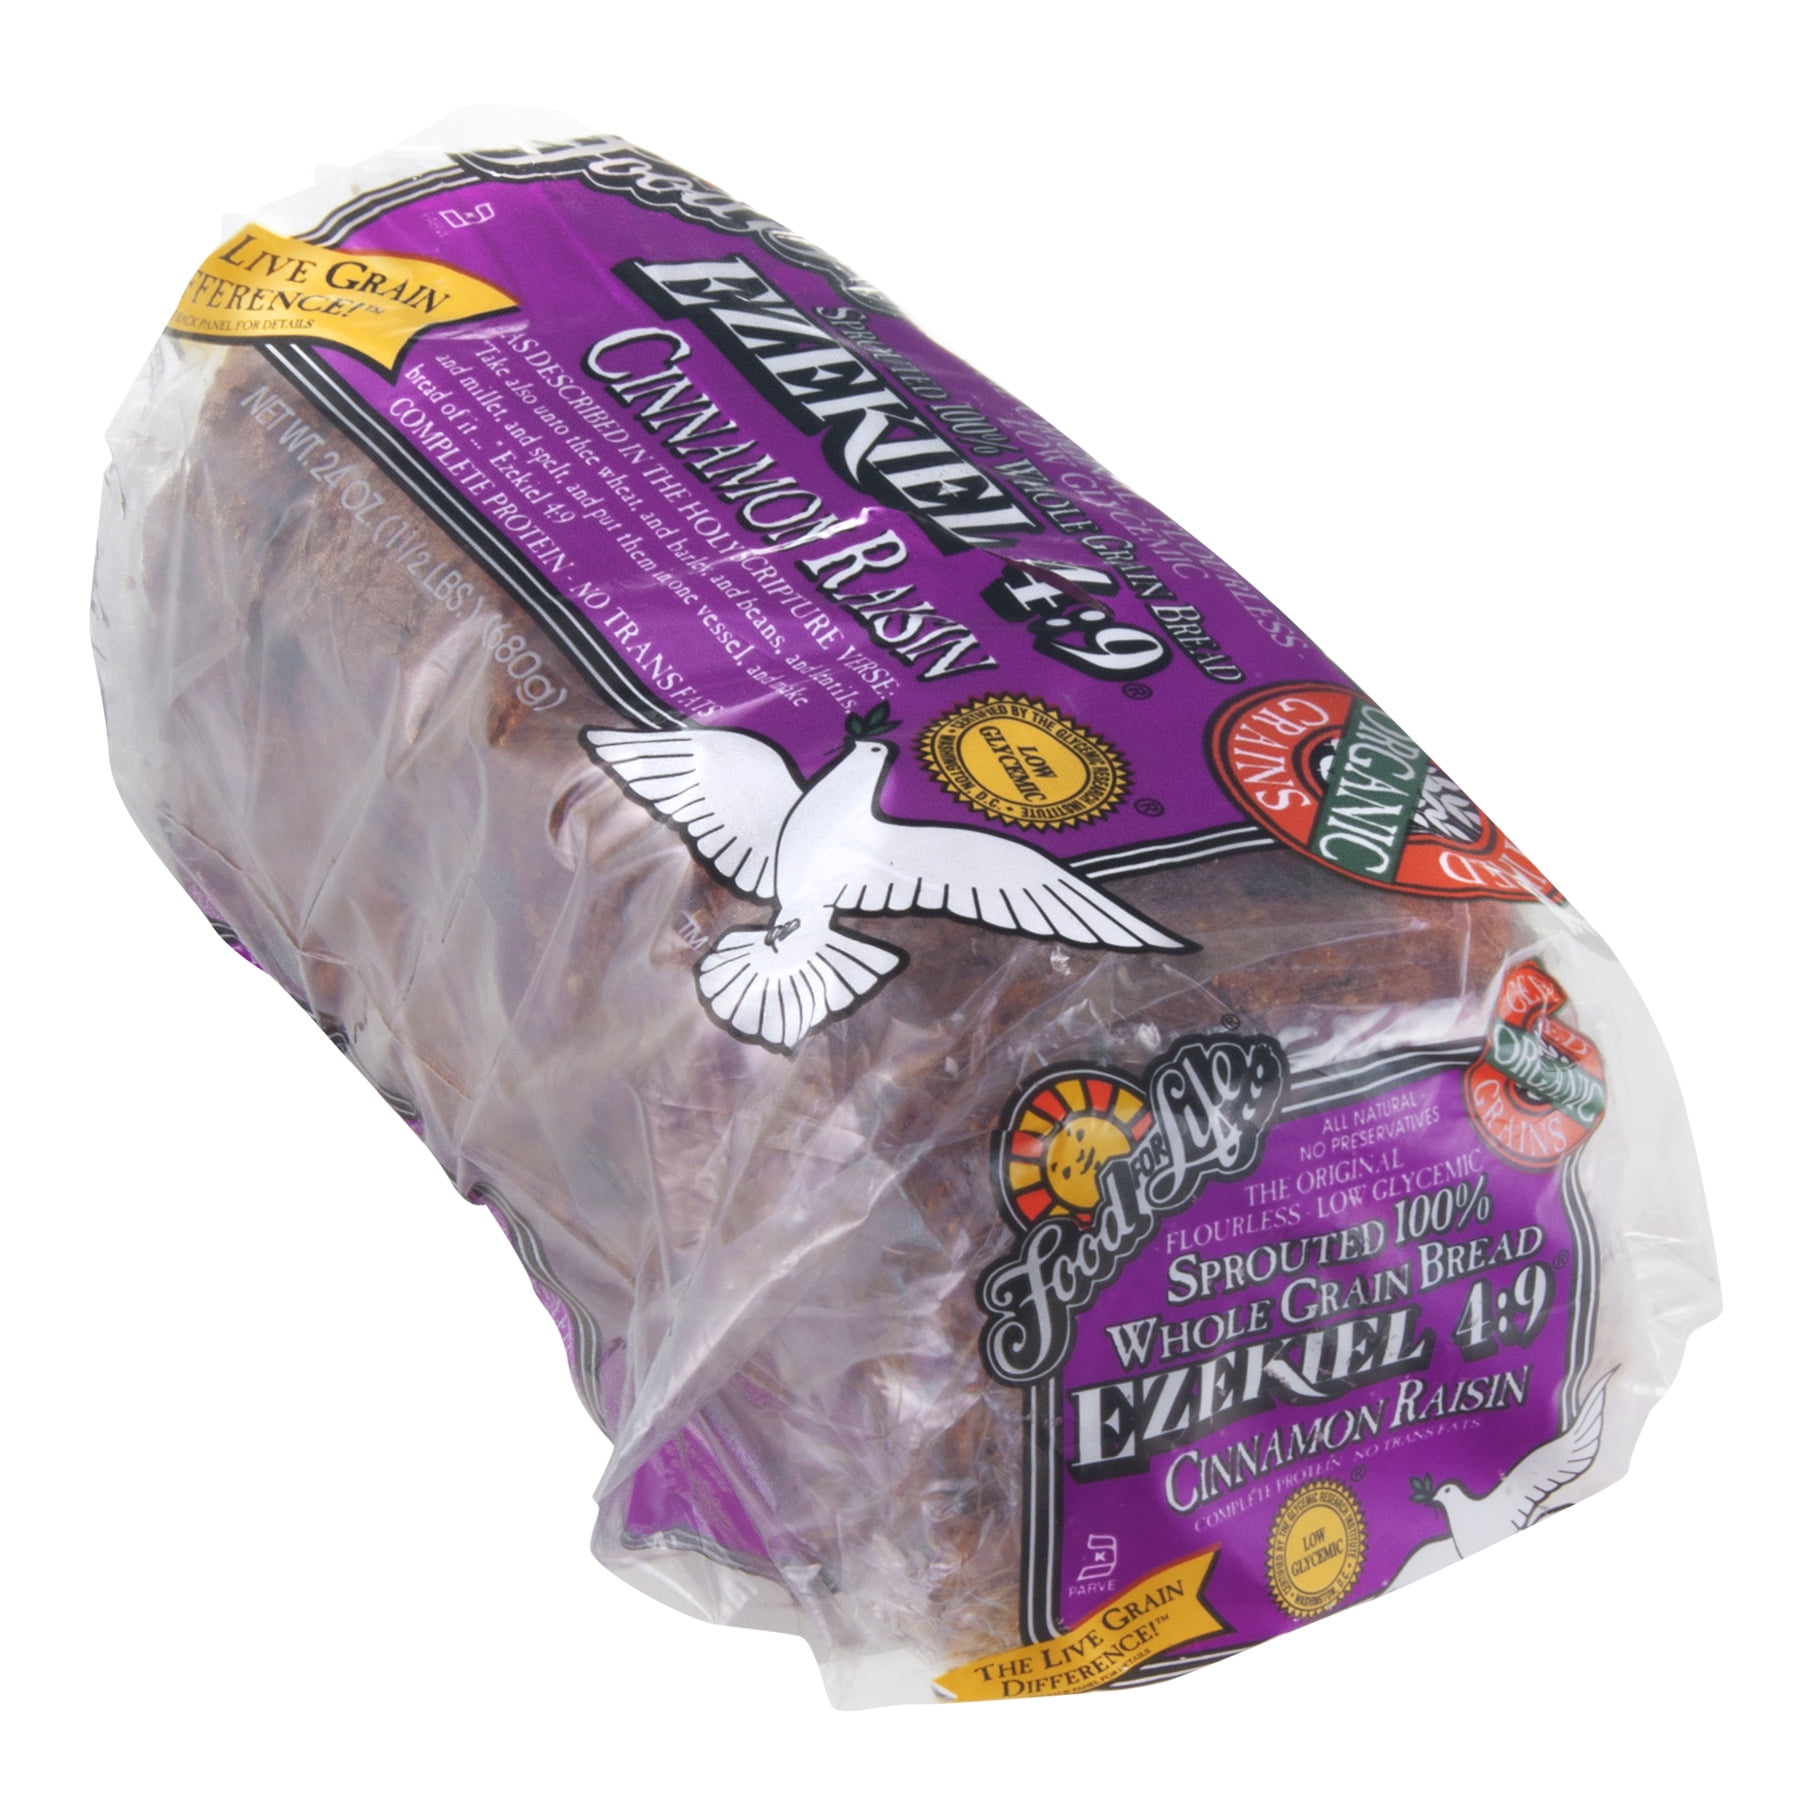 Food for Life Ezekiel Cinnamon Raisin Bread, 24oz, 20 CT Bag (Frozen)